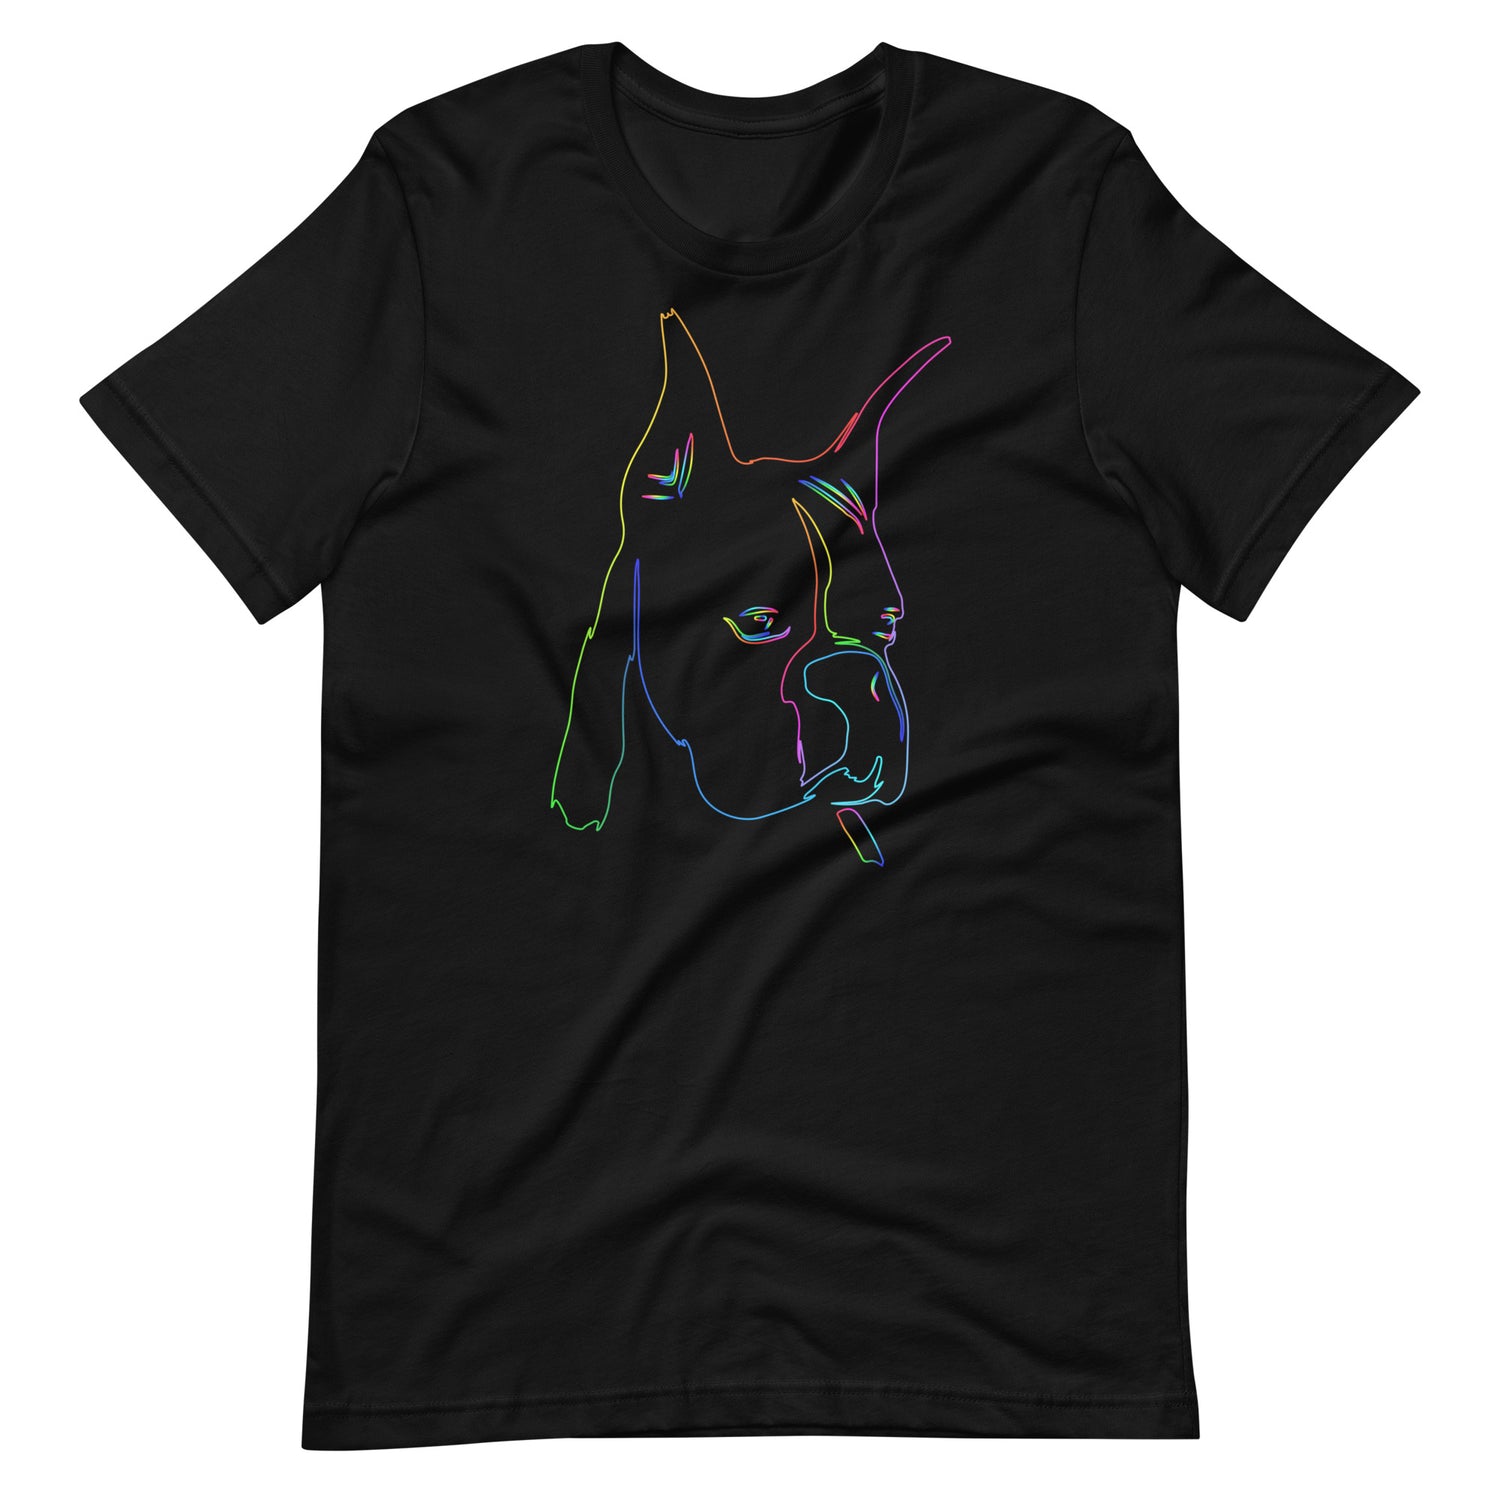 Colored line Boxer face on unisex black t-shirt